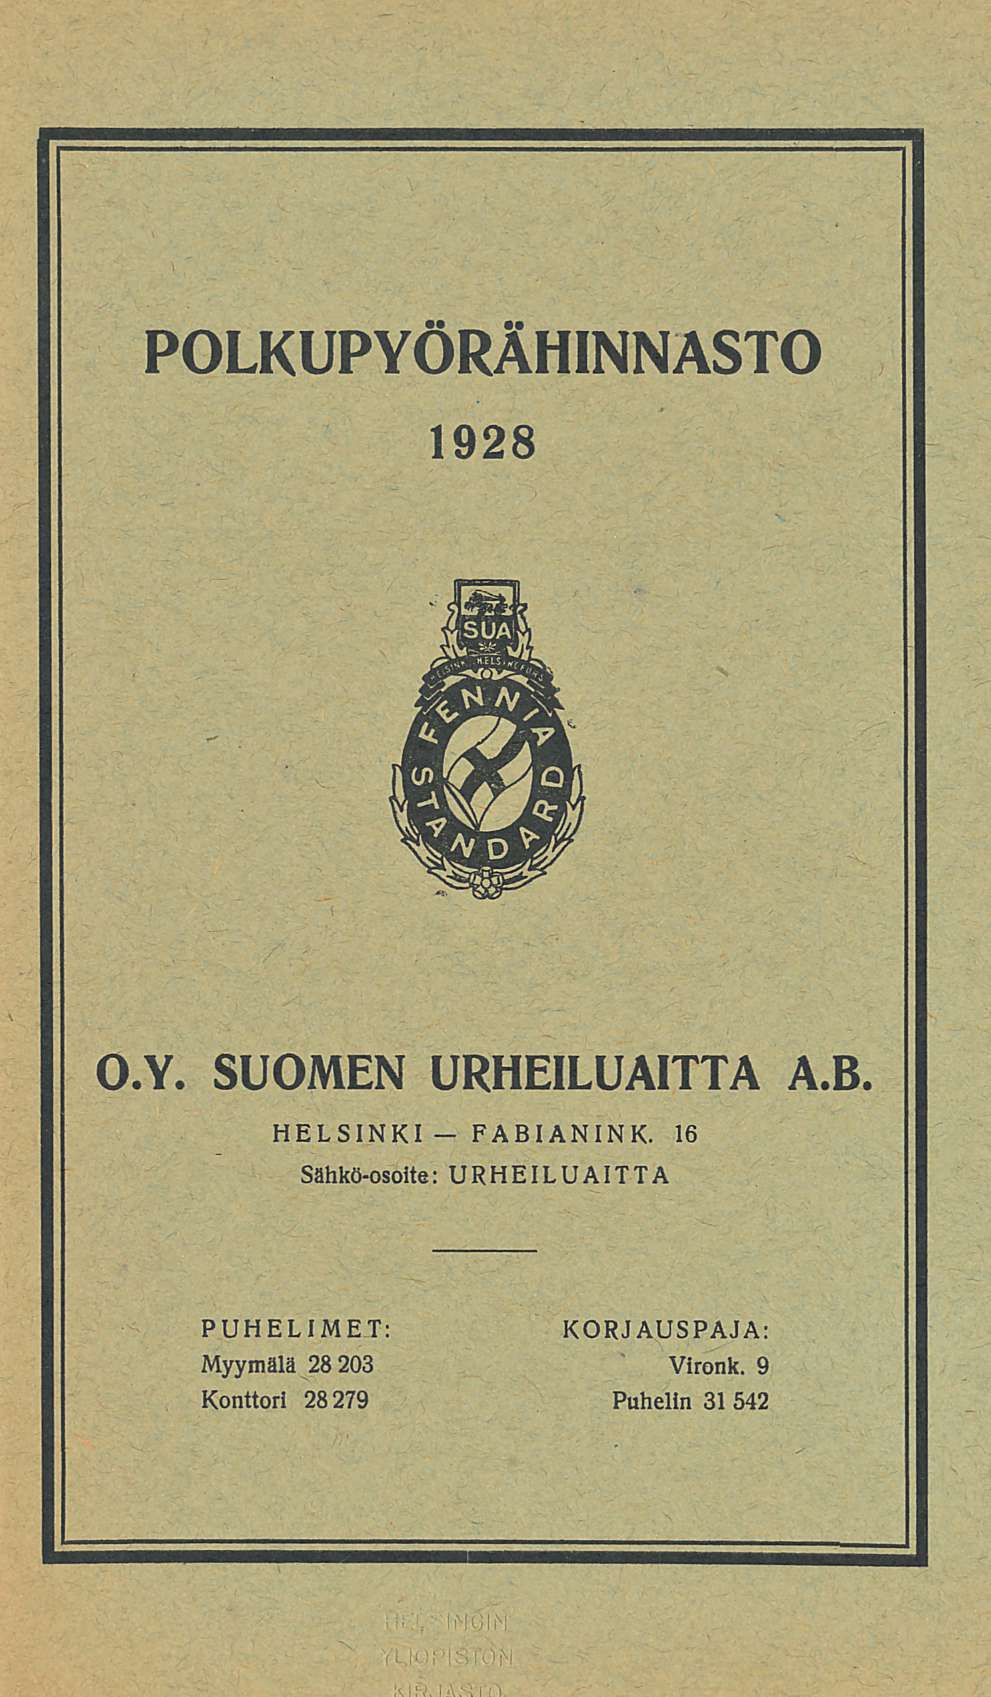 FAB POLKUPYÖRÄHINNASTO1928. 1928 O.Y. SUOMEN URHEILUAITTA A.B. HELSINKI - län IN K.